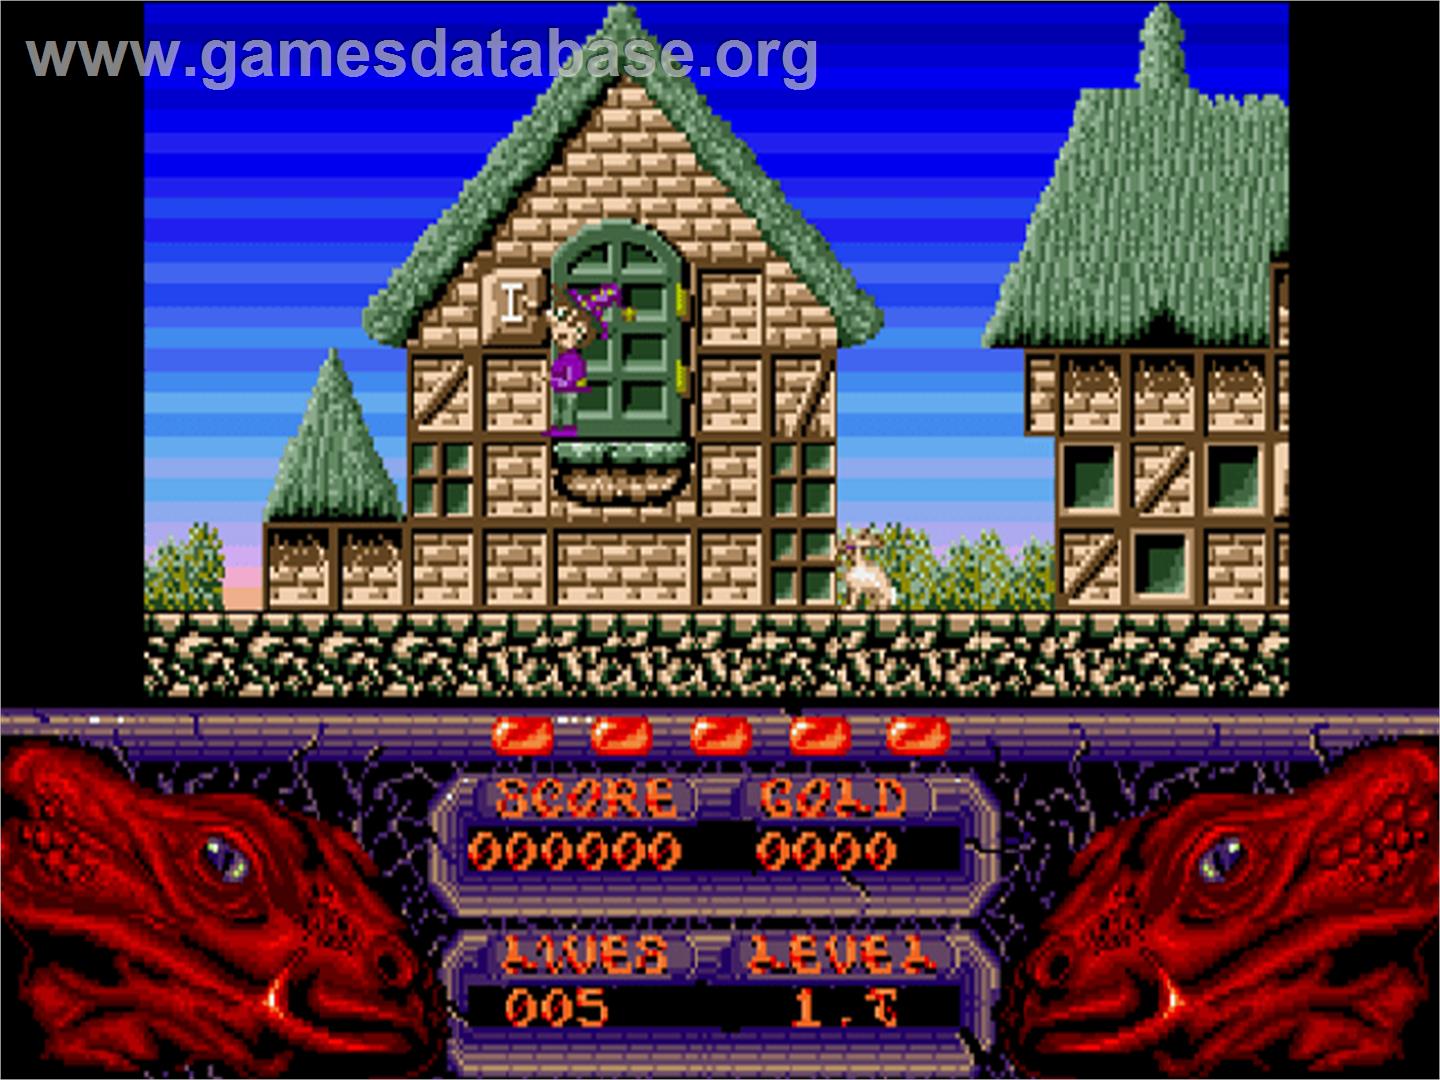 Seven Gates of Jambala - Commodore Amiga CD32 - Artwork - In Game